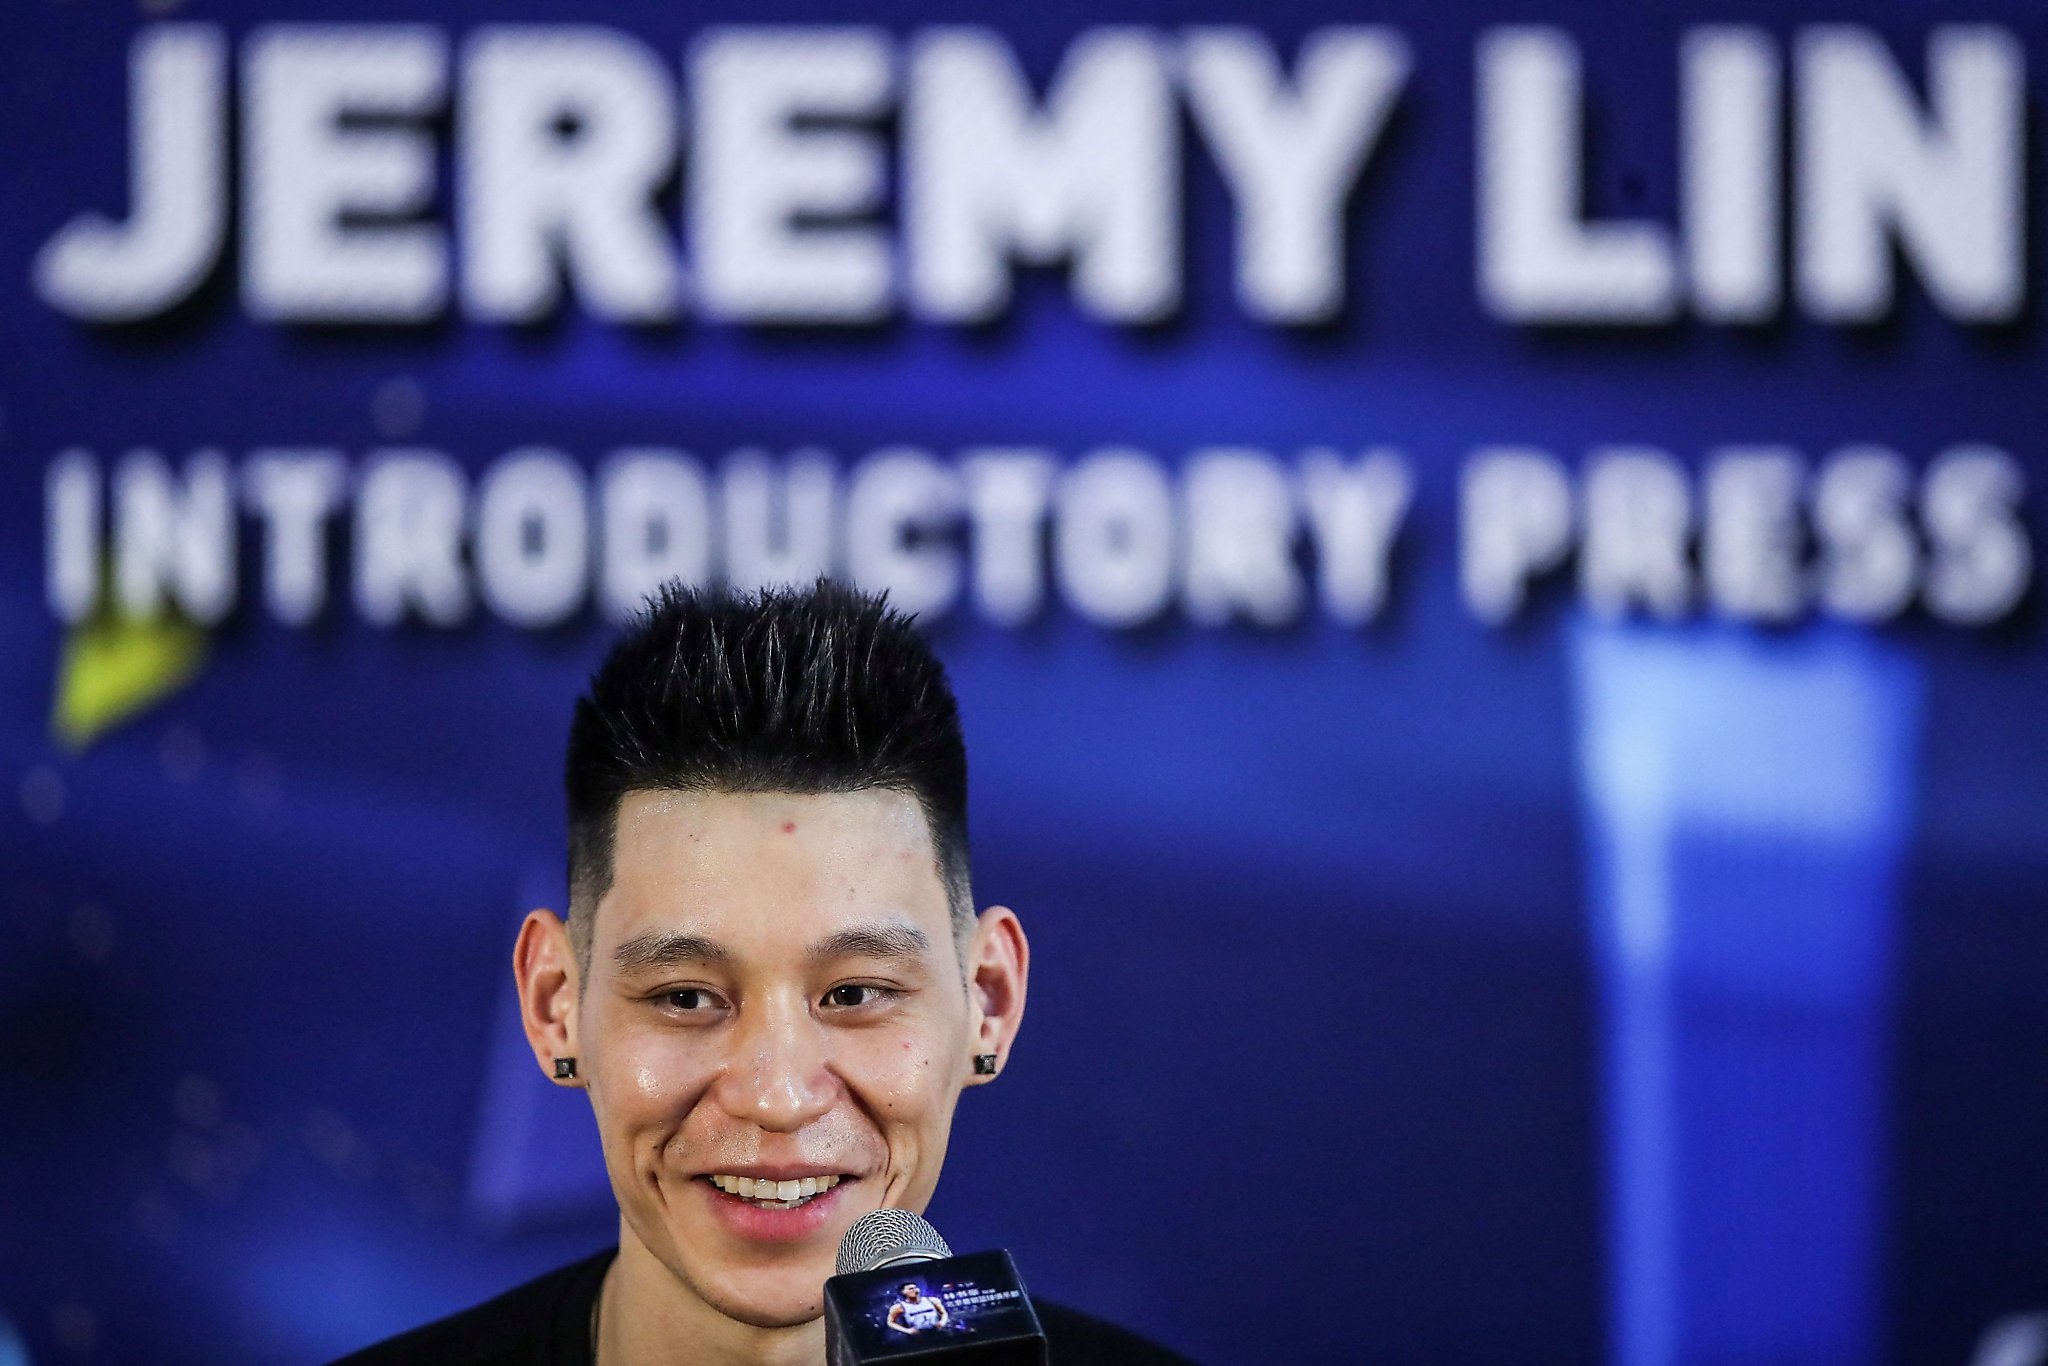 Jeremy Lin: Jeremy Lin: 'They called me coronavirus', Sports